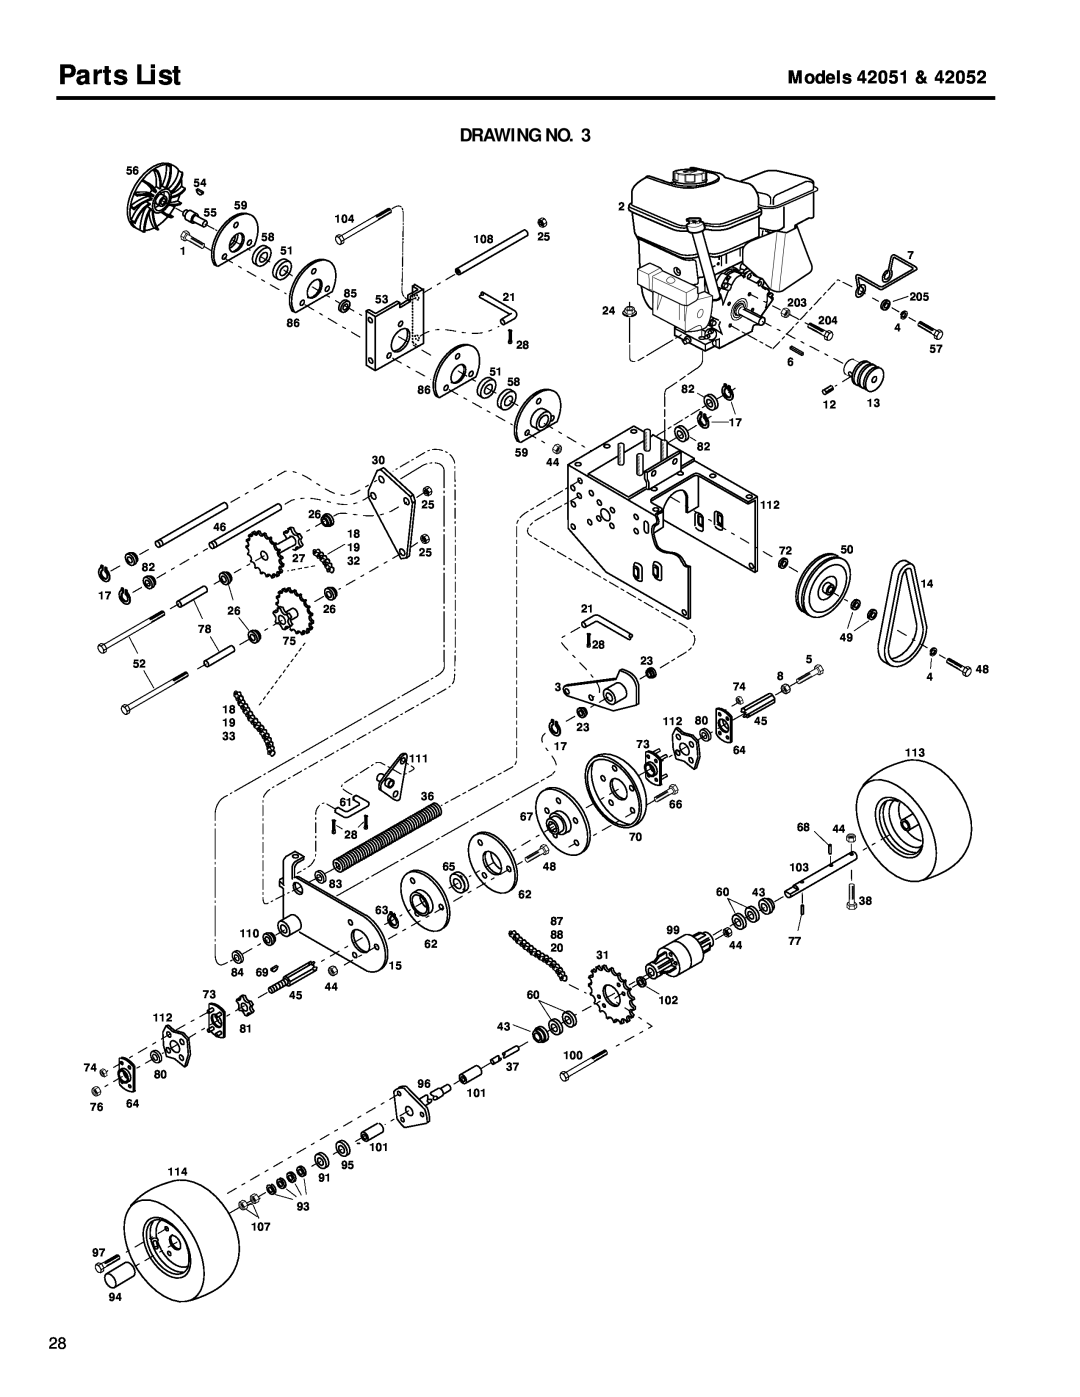 Troy-Bilt 42052, 42051 owner manual Parts List, Models, Drawing No 